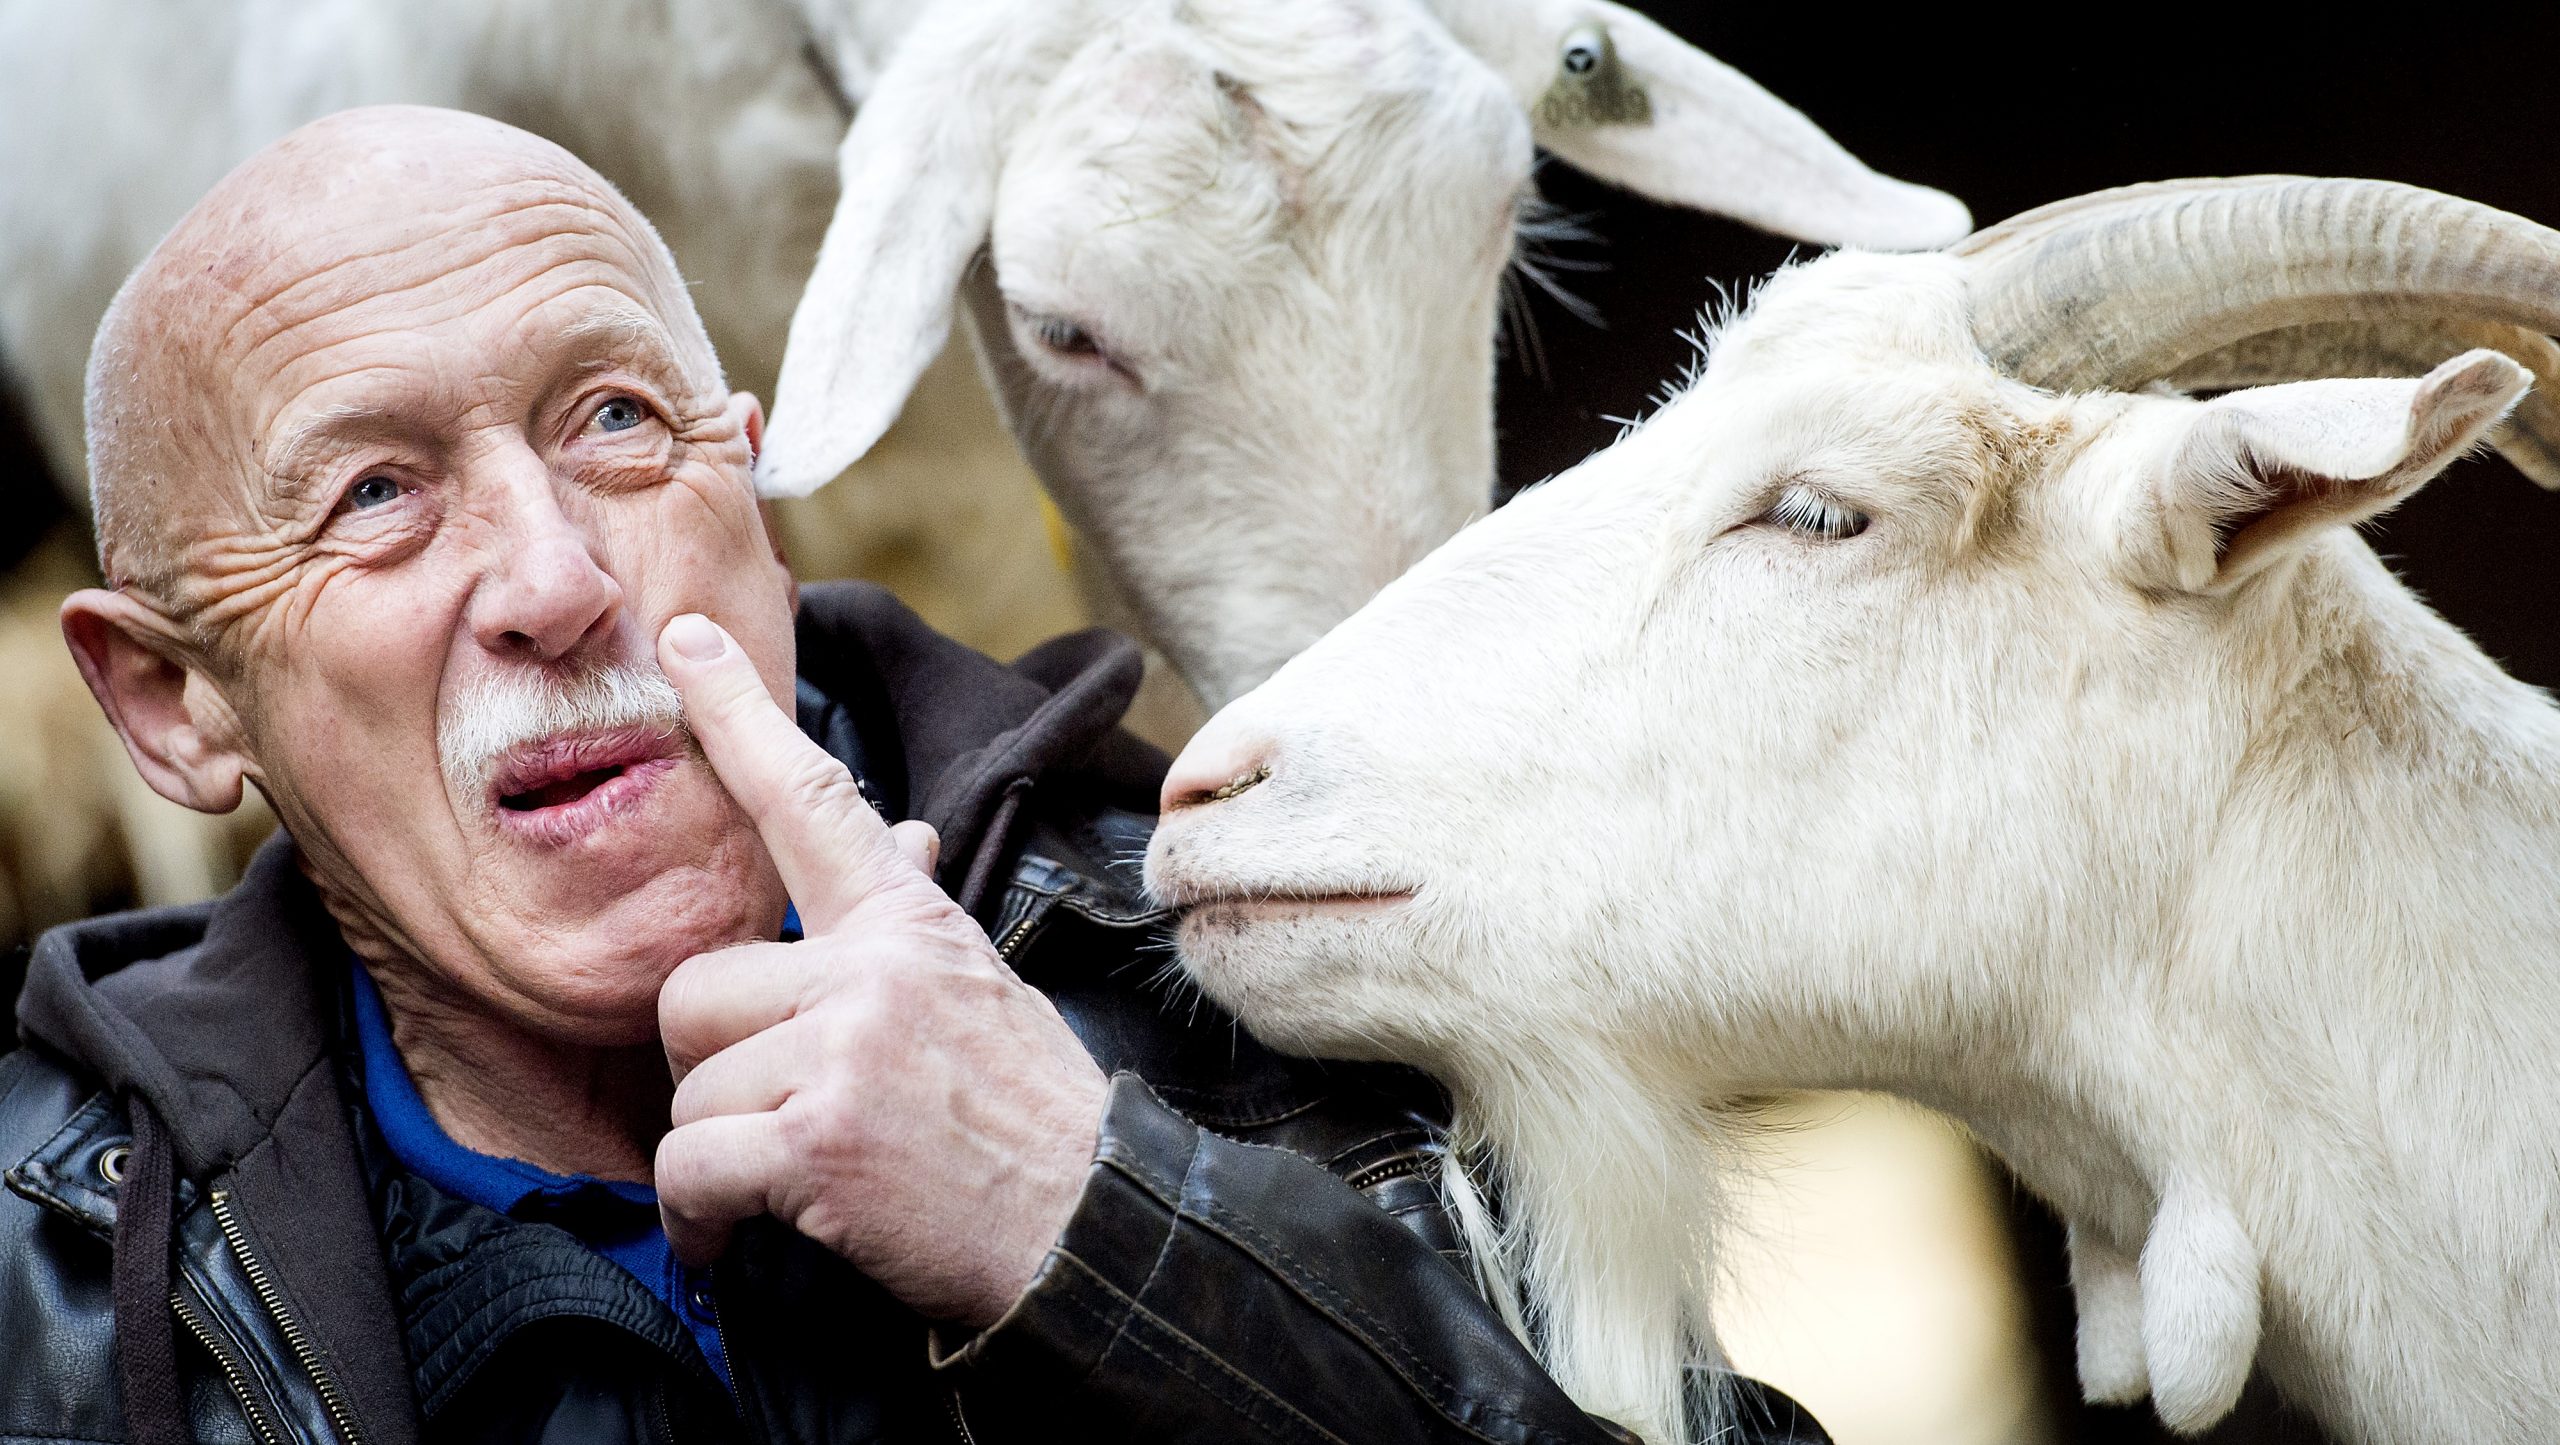 'The Incredible Dr. Pol' Dr. Jan Pol poses alongside a goat.